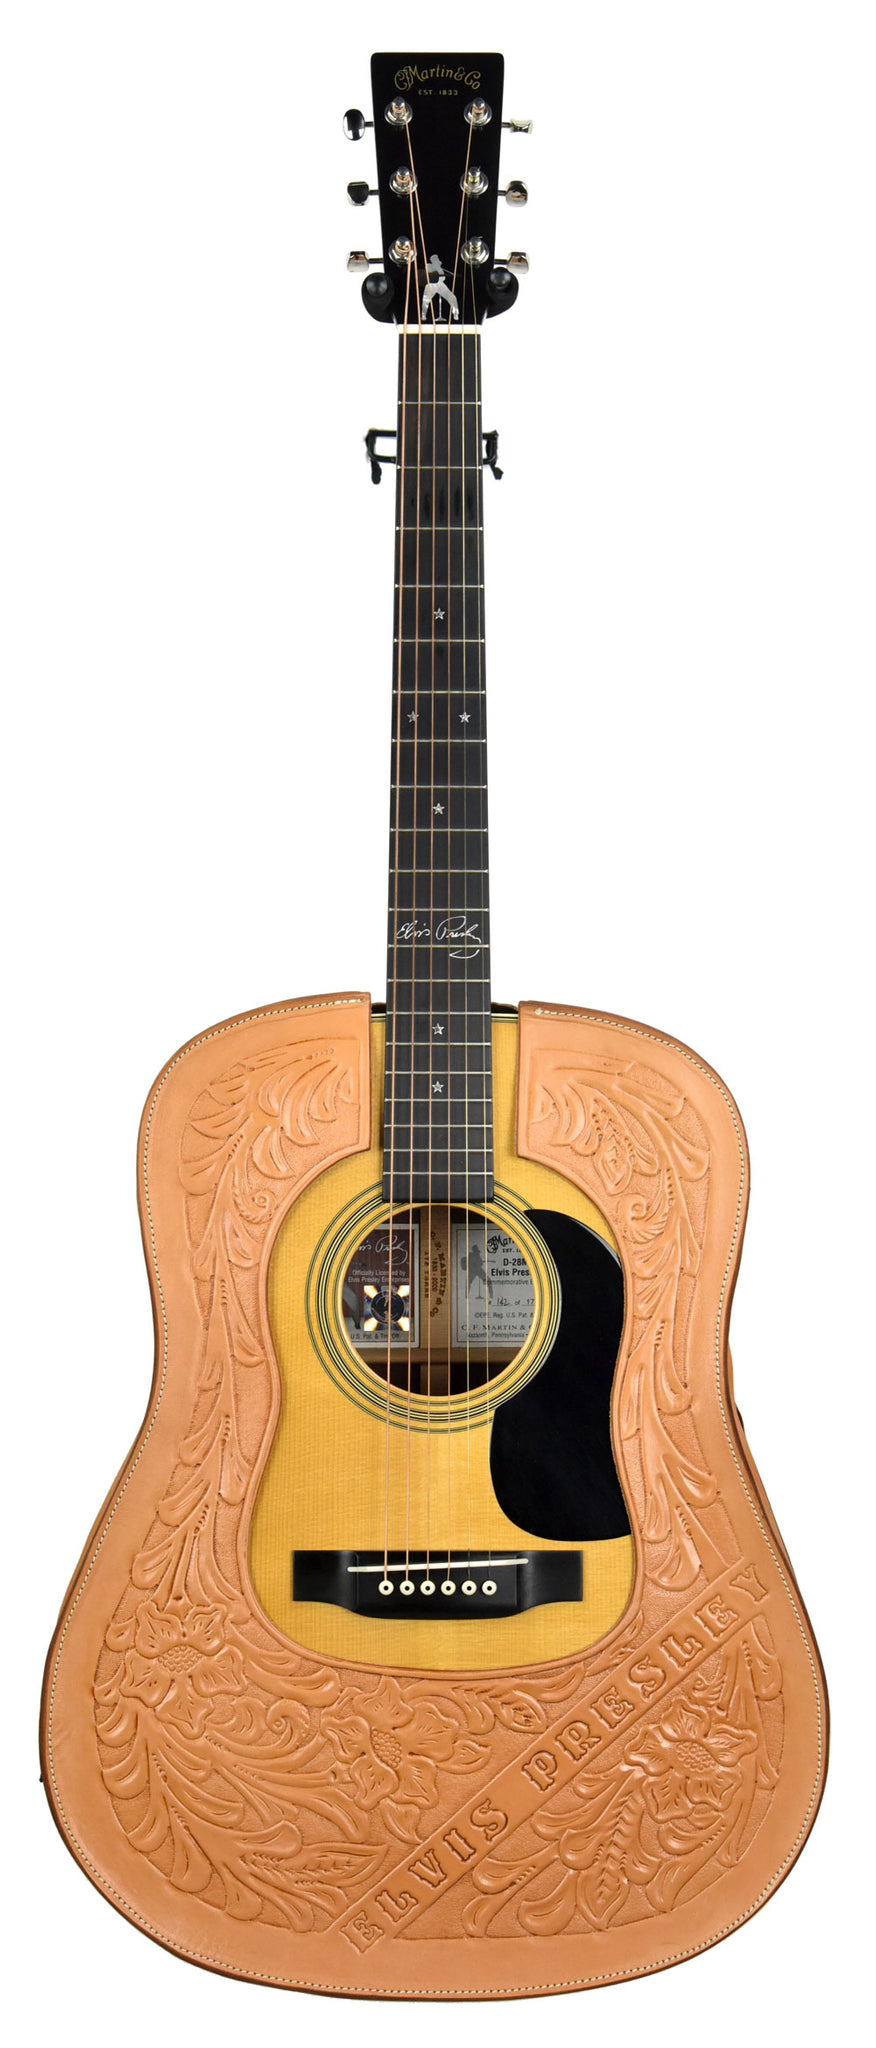 egmond acoustic guitar 108sb made in korea